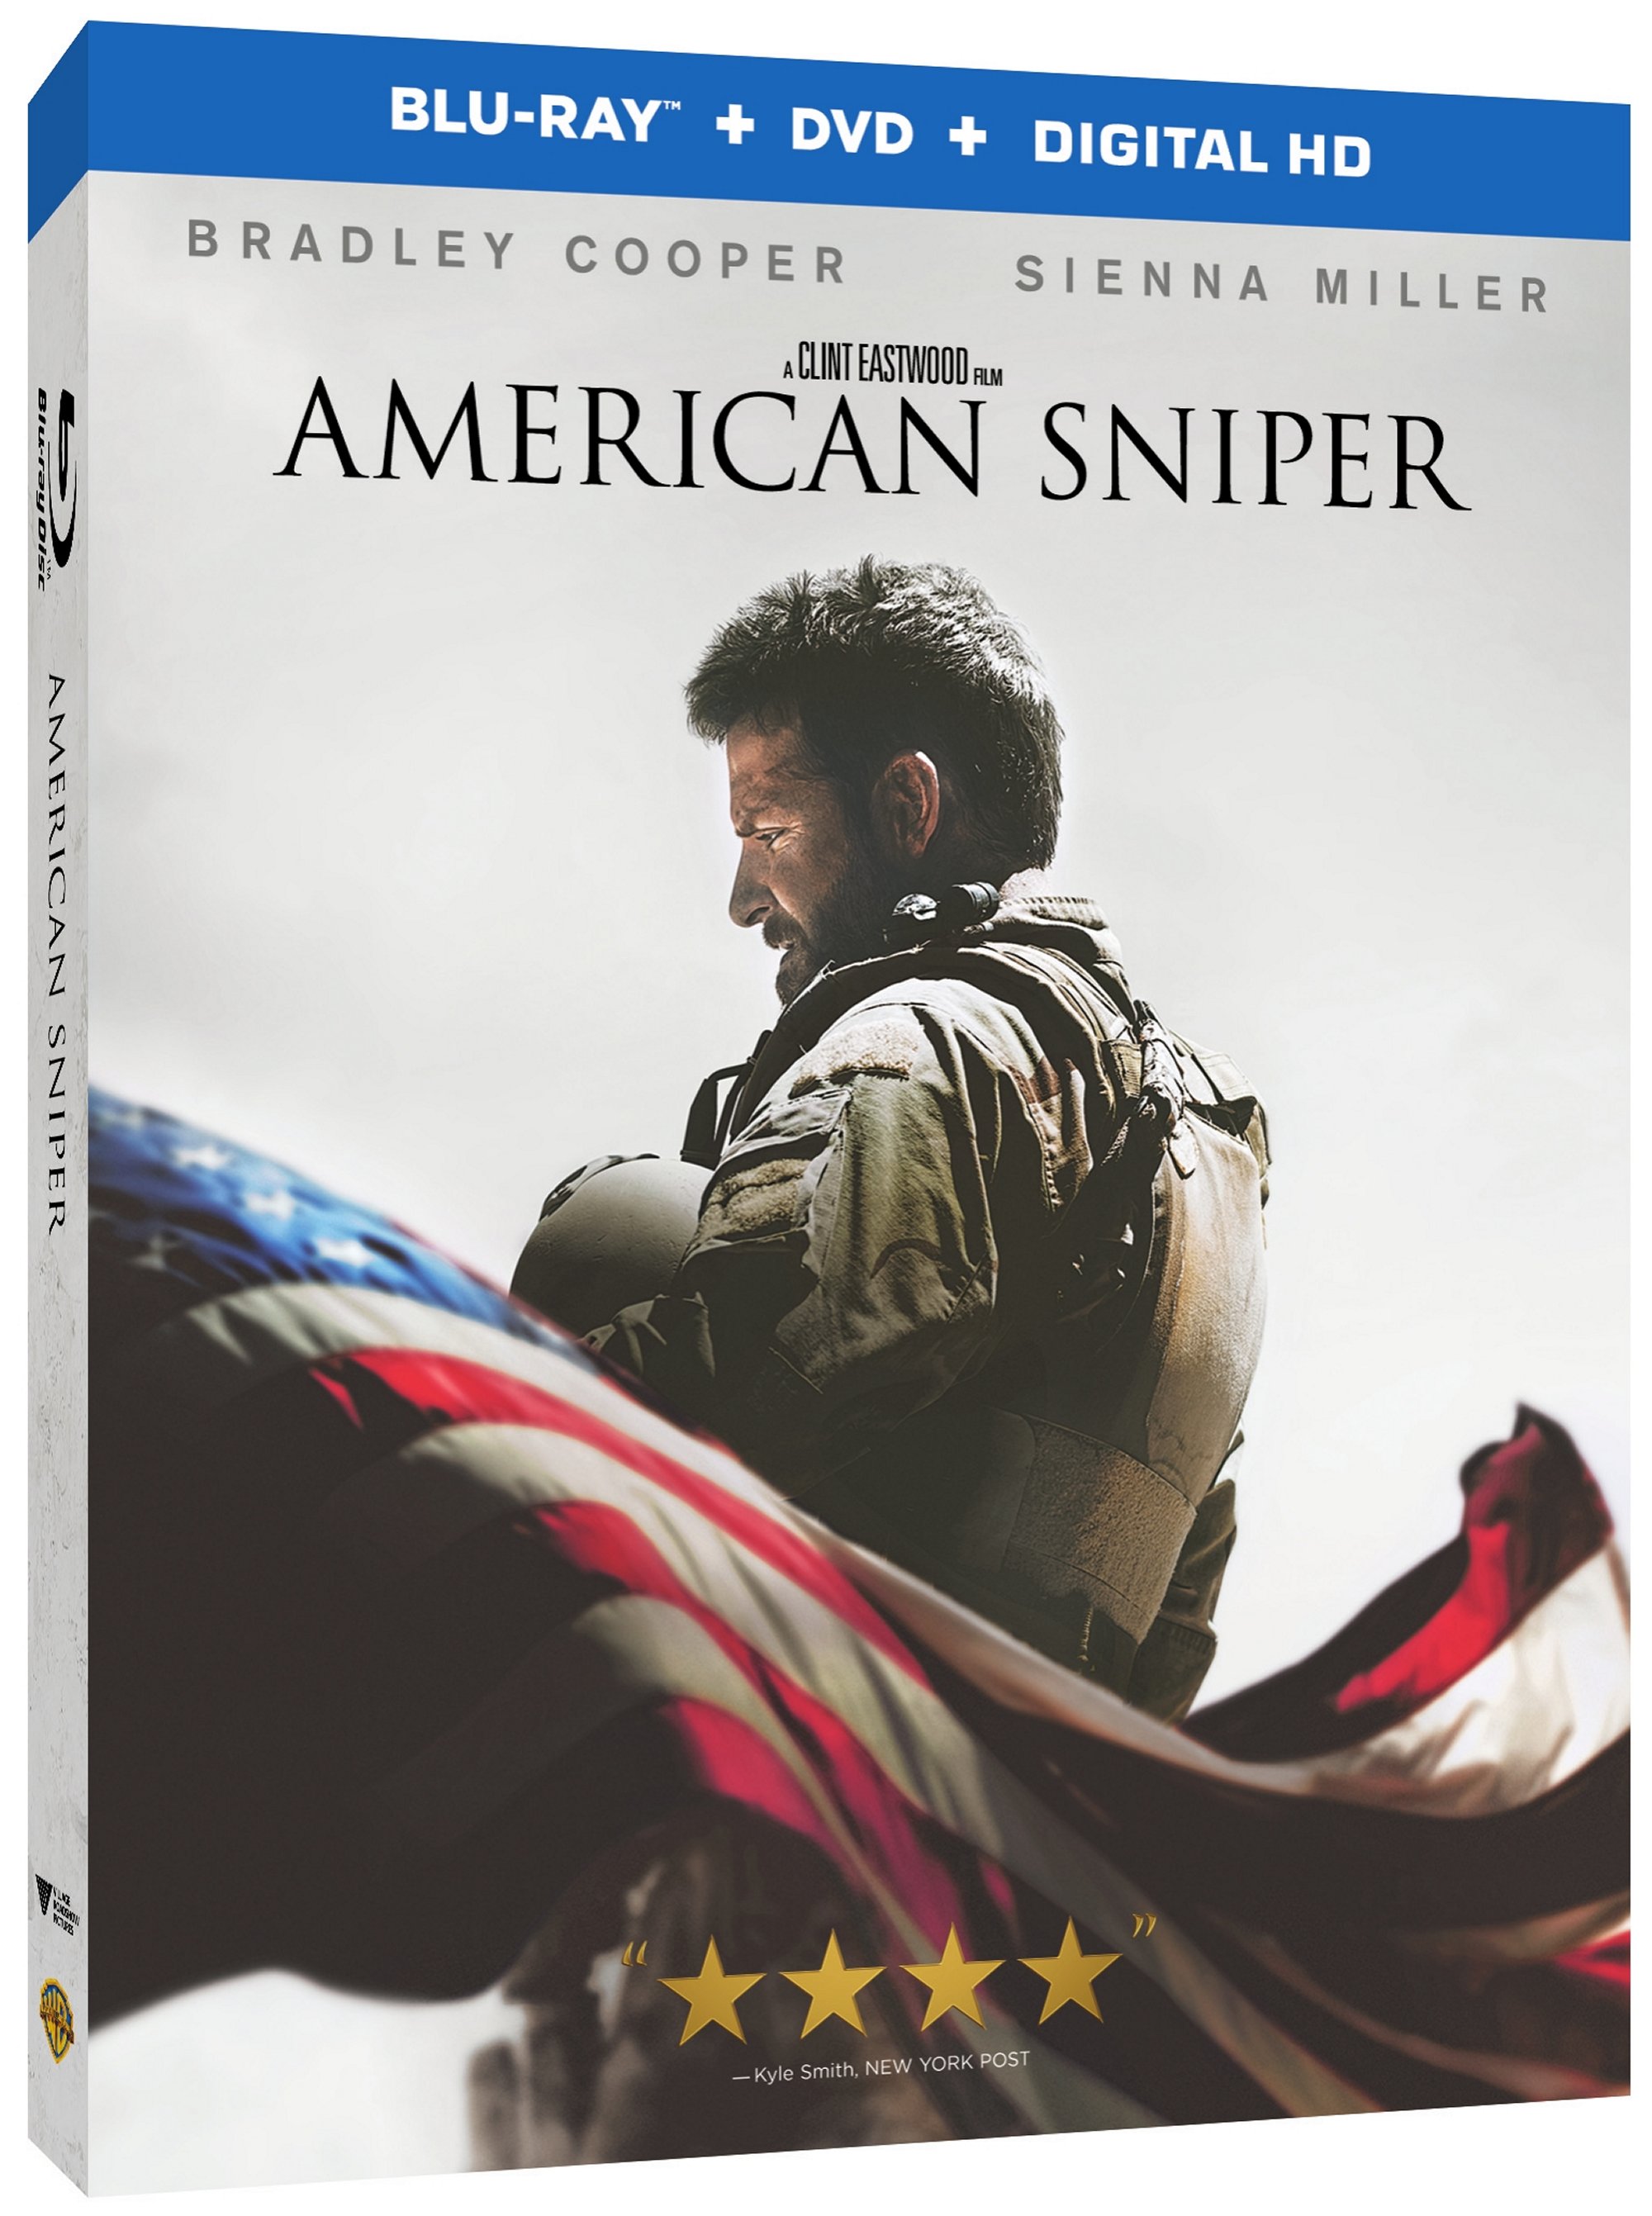 American Sniper Blu-ray Review